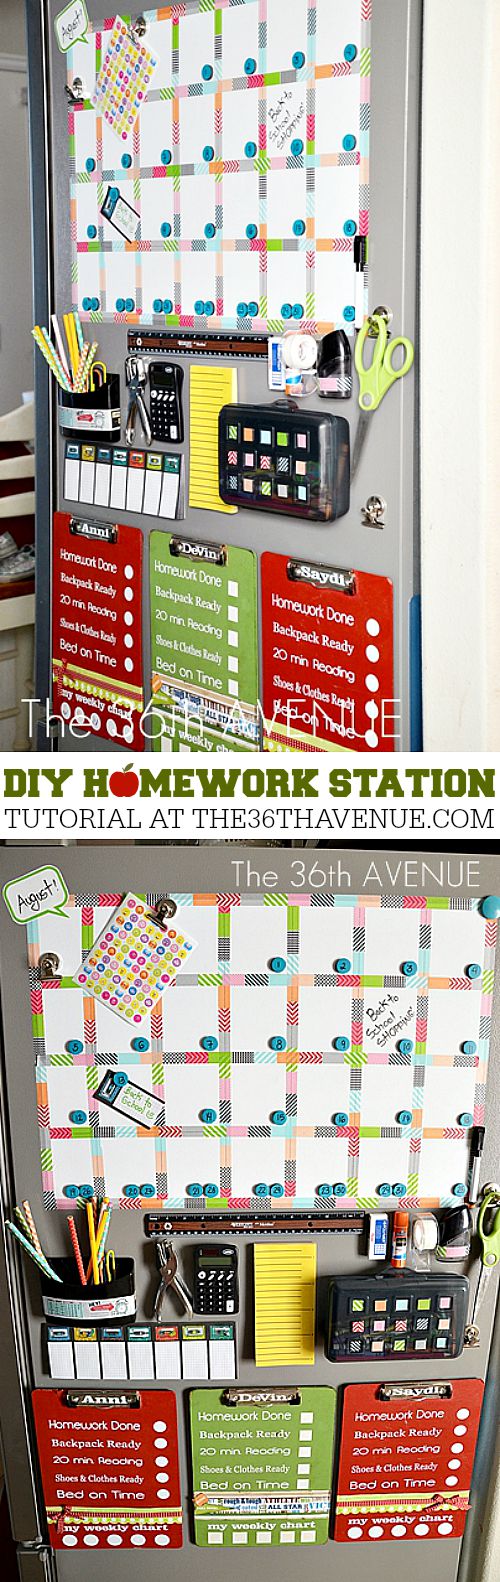 DIY-Homework-Station-at-the36thavenue.com-